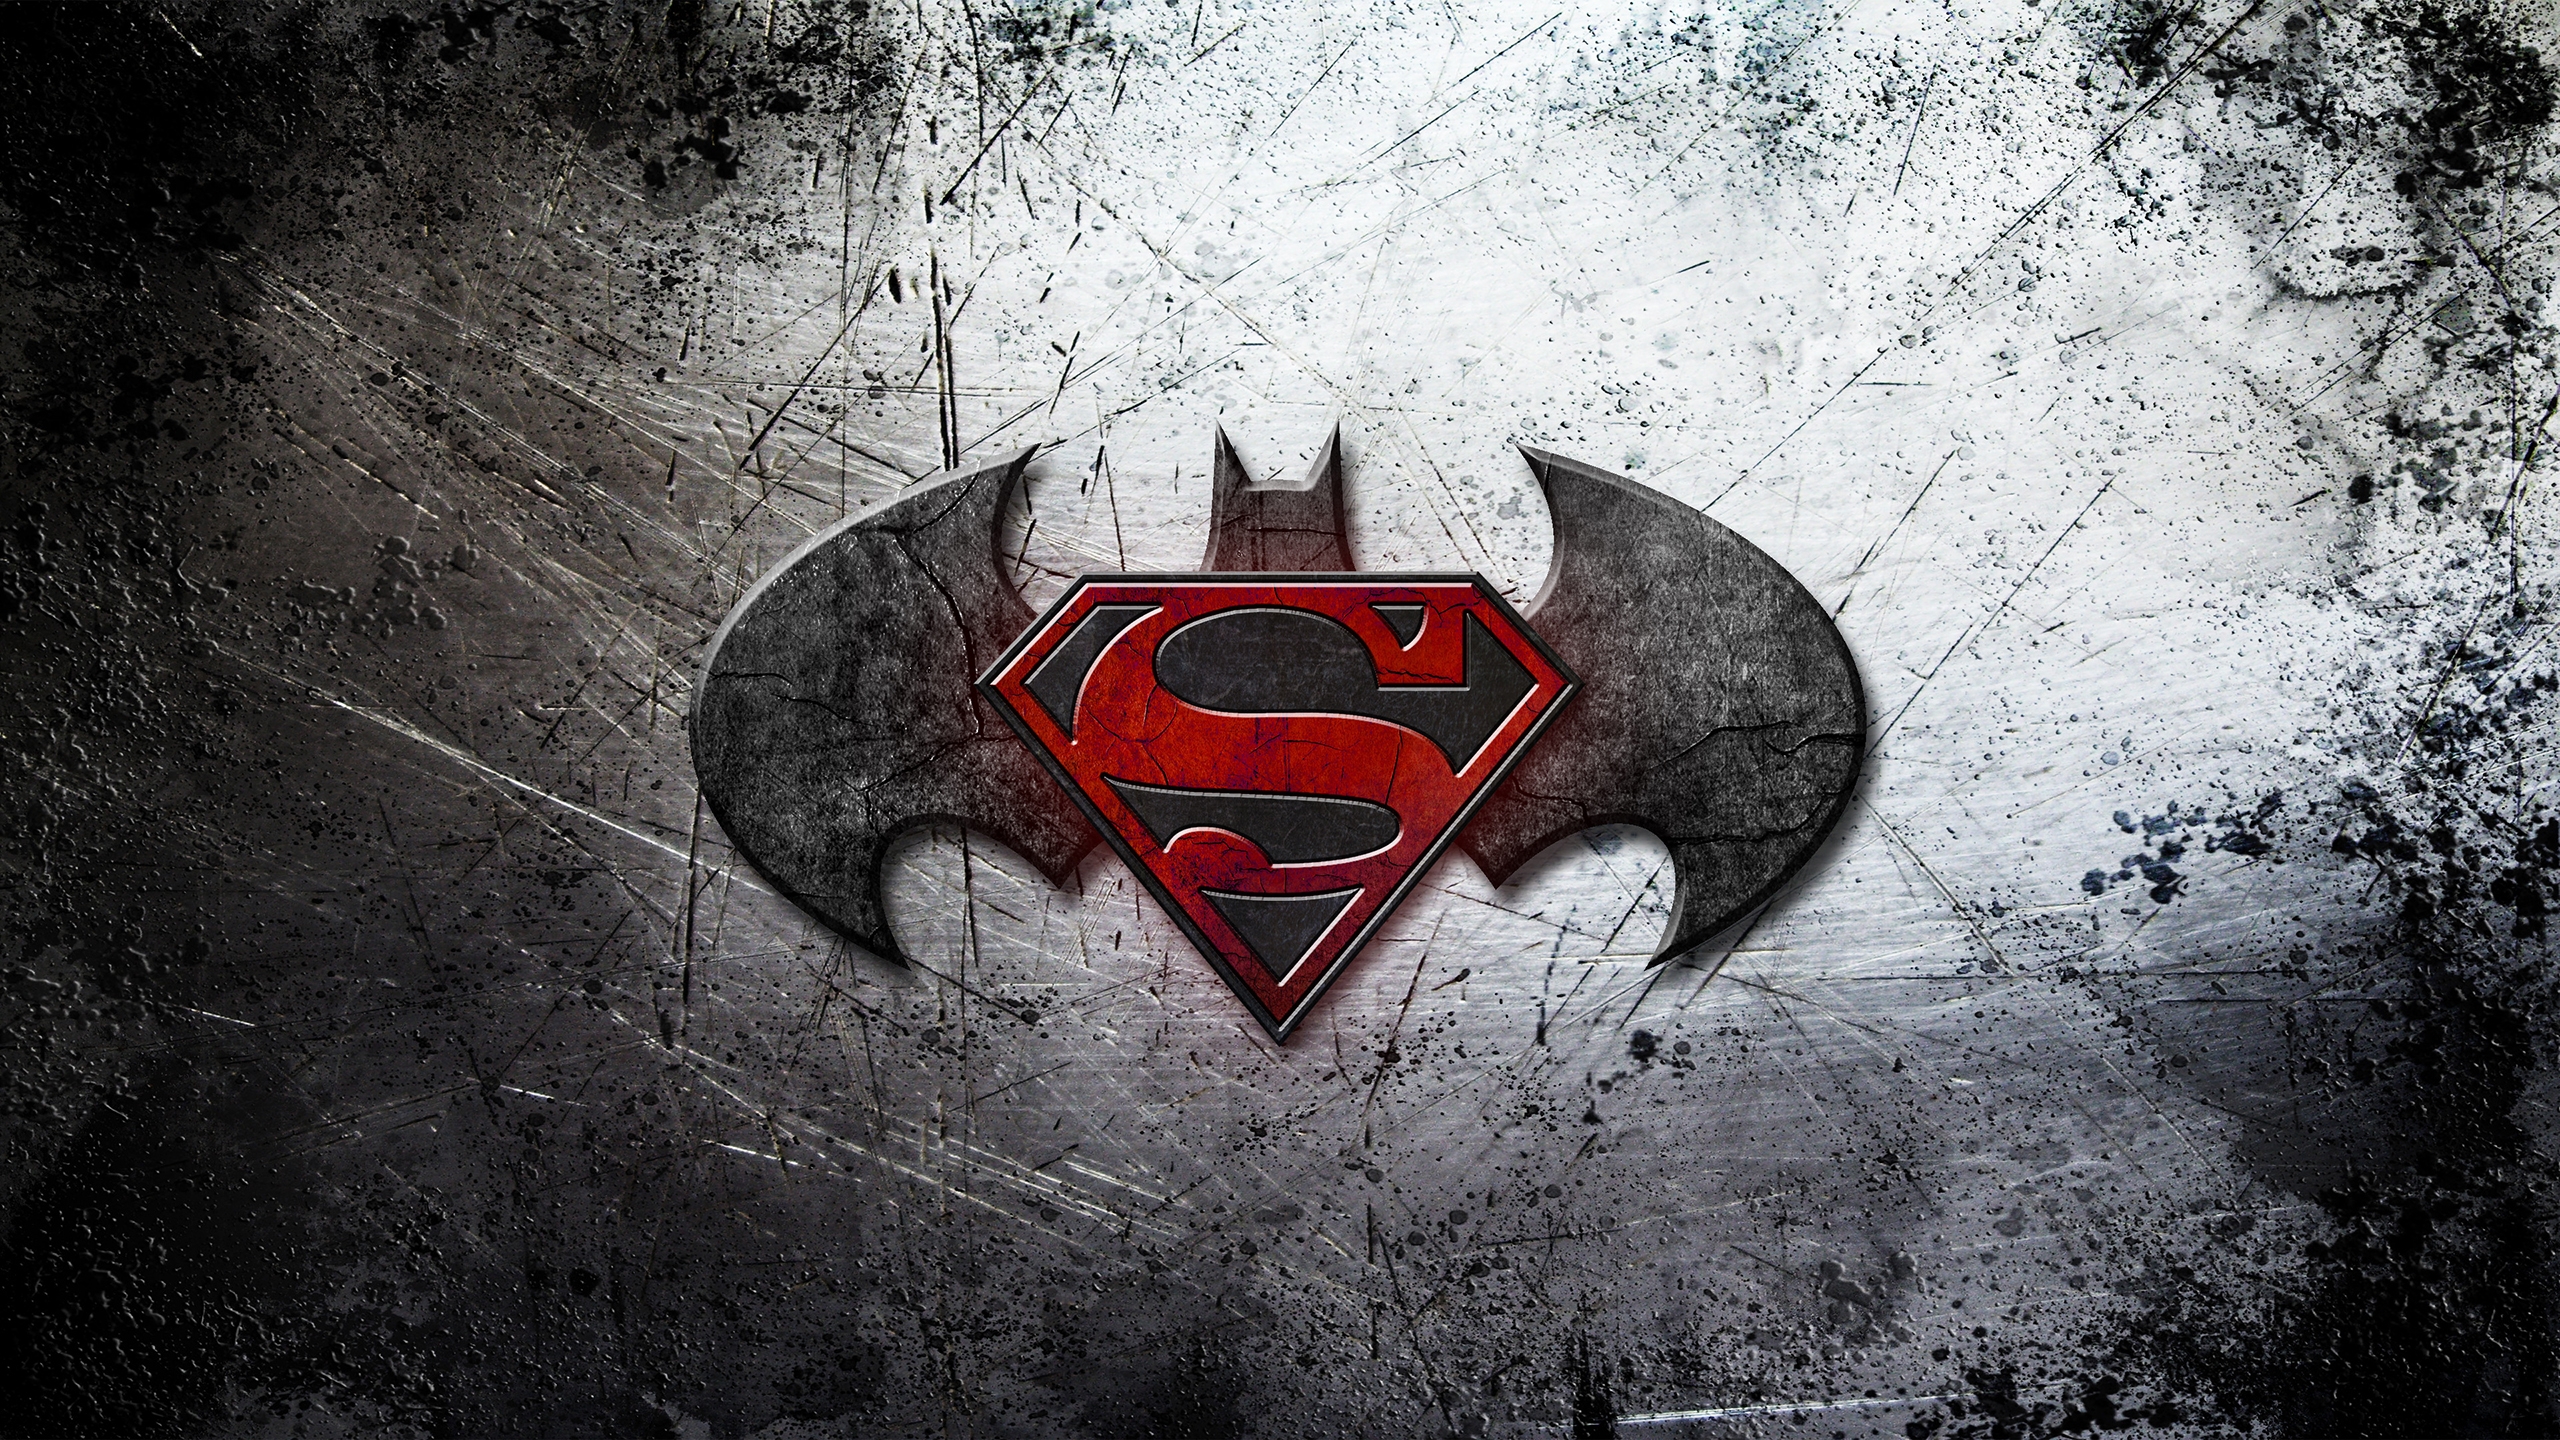 Batman vs Superman Logo Wallpaper in High Resolution at Movies